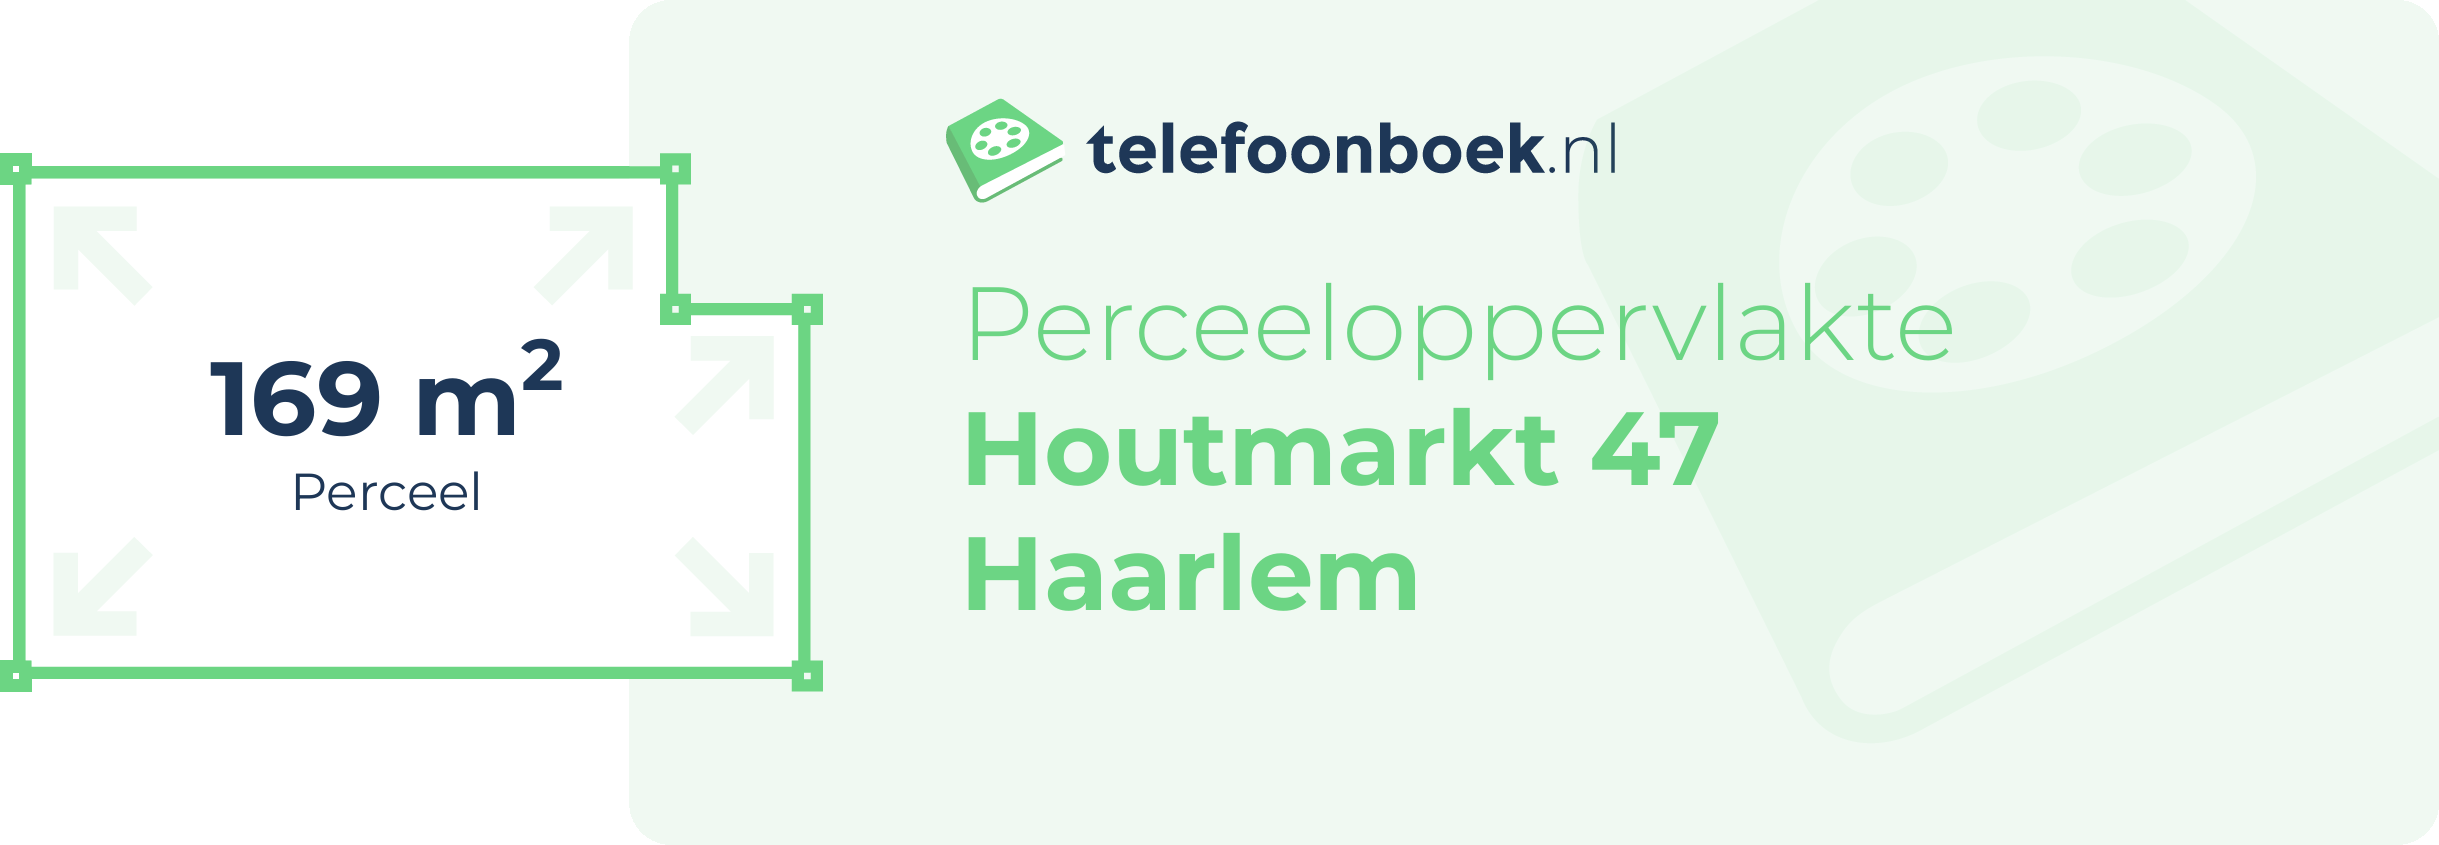 Perceeloppervlakte Houtmarkt 47 Haarlem